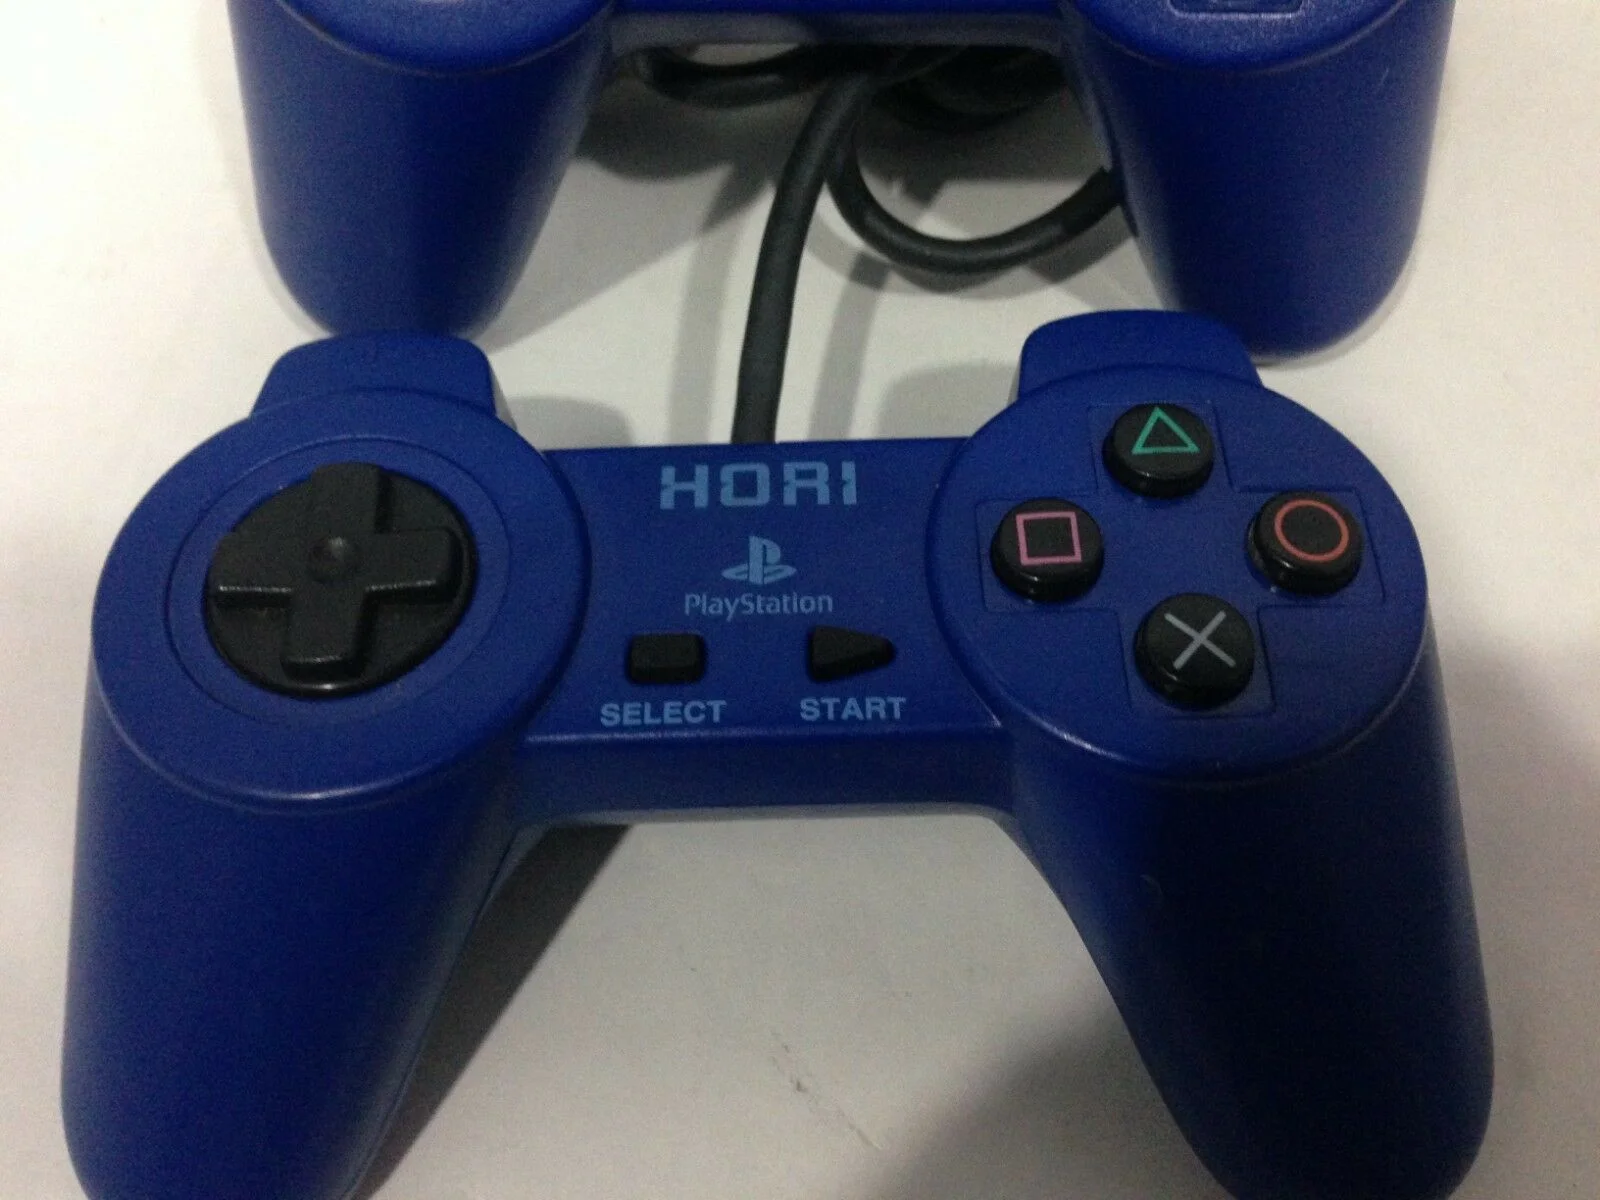  HORI Playstation PAD PS Controller